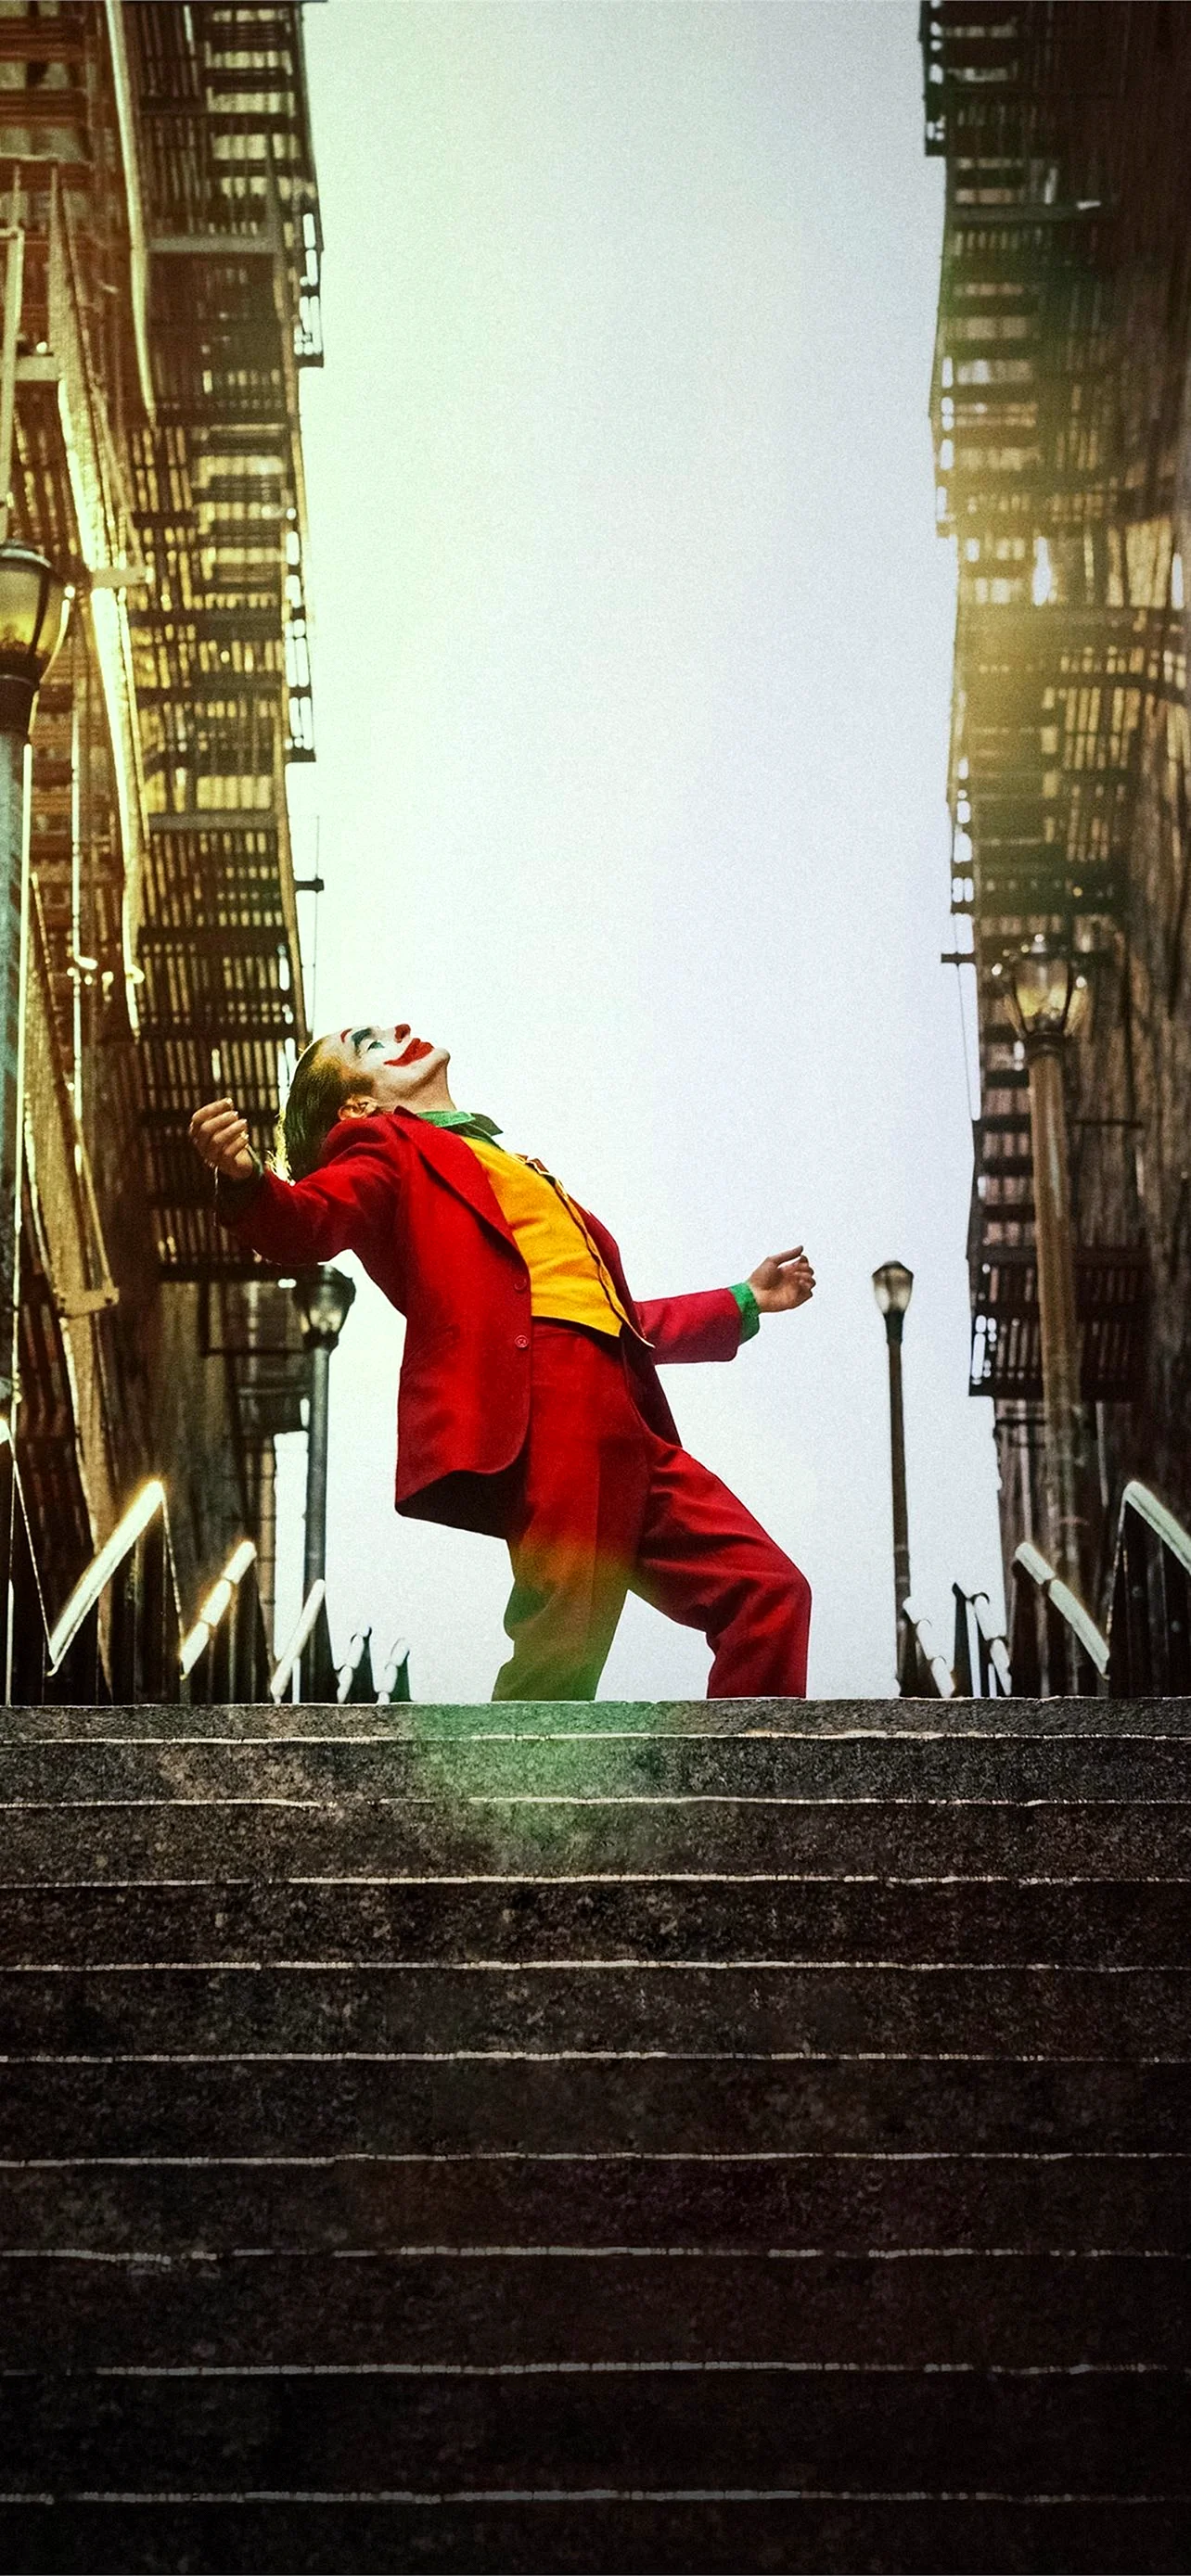 Joker 2019 Wallpaper for iPhone 12 Pro Max